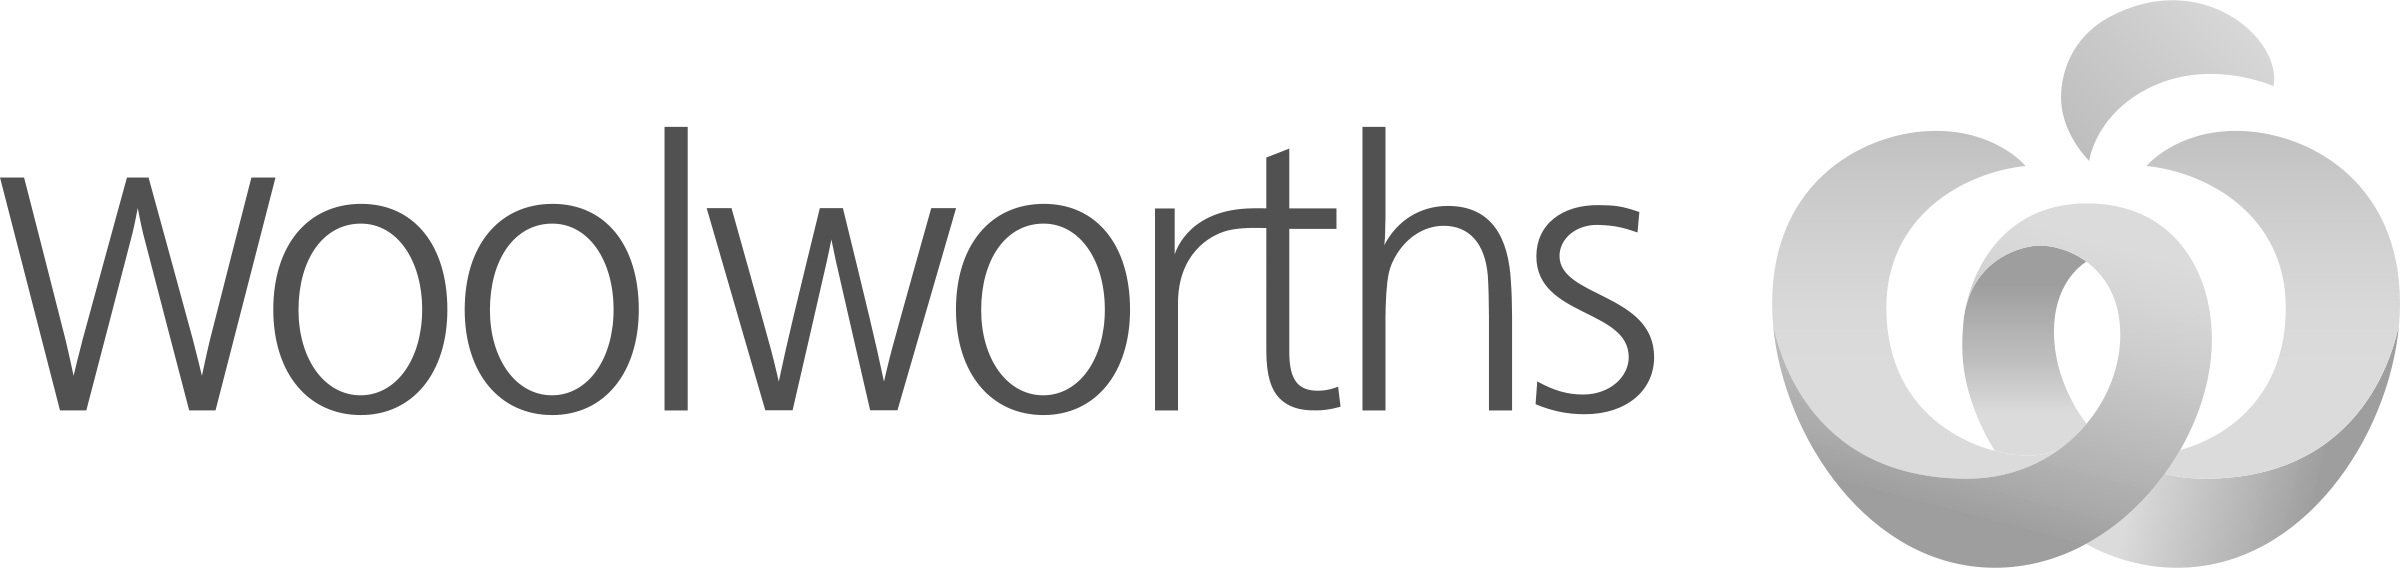 woolworths-5-logo-png-transparent.jpg